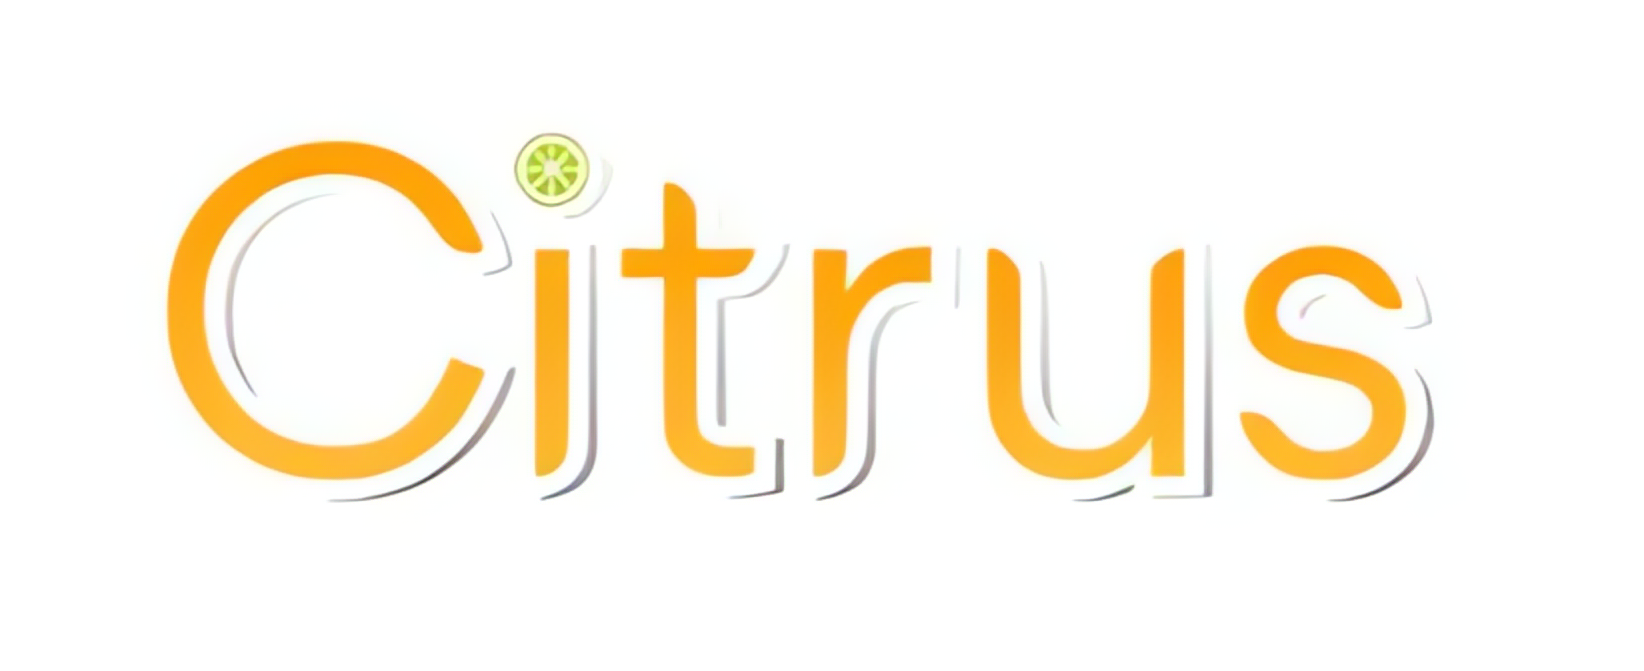 Citrus会社logo.png